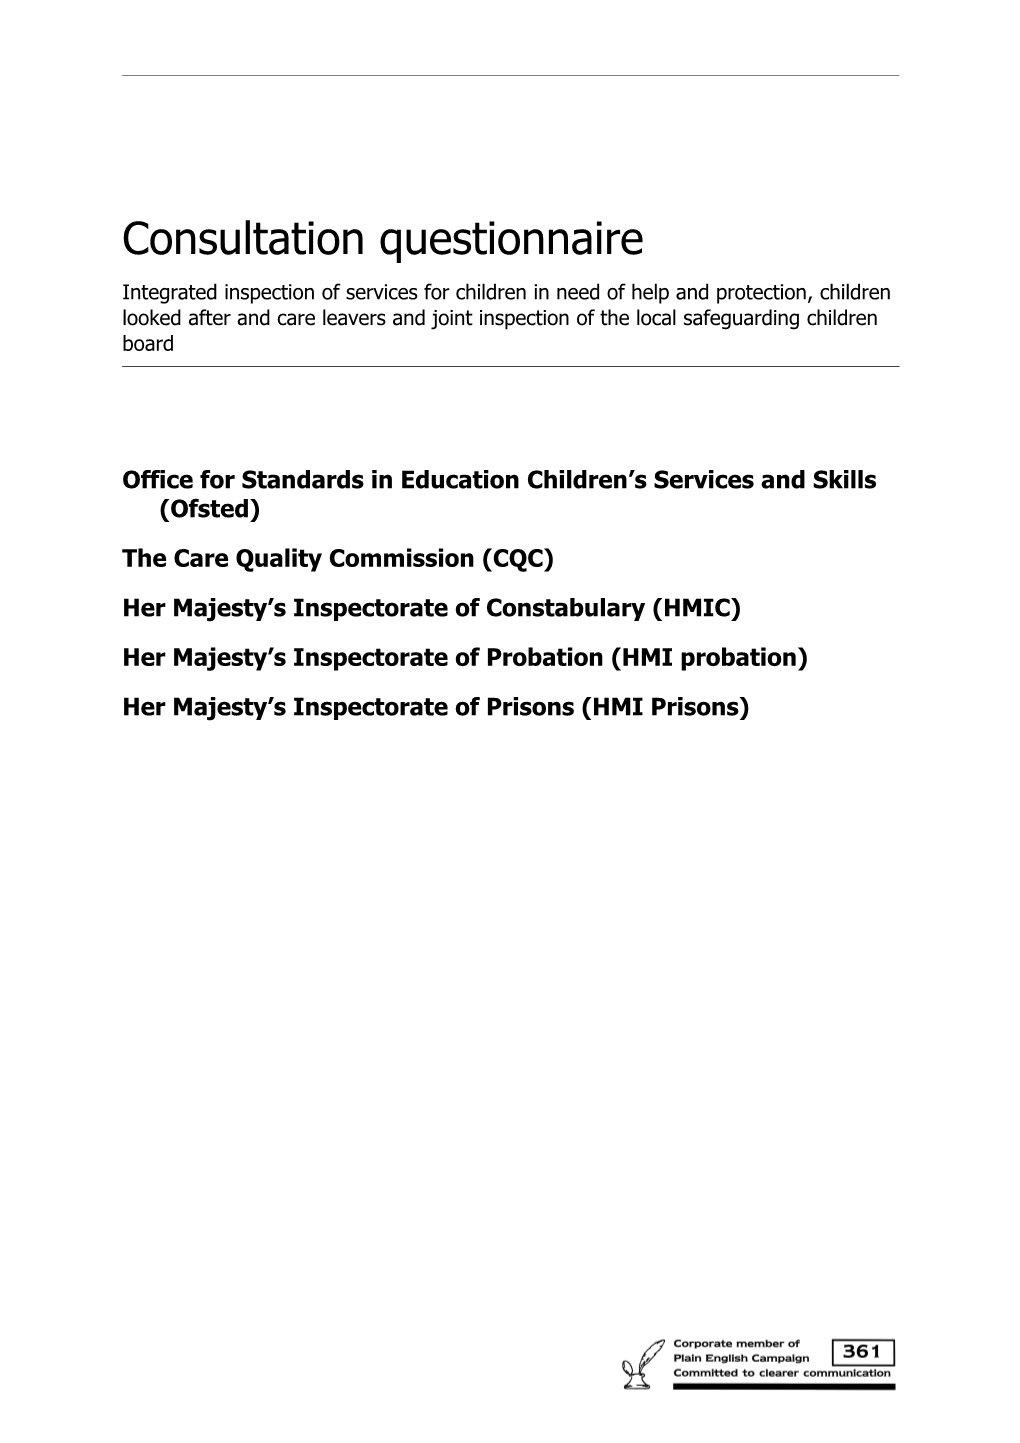 Consultation Document - Questions for Online Survey